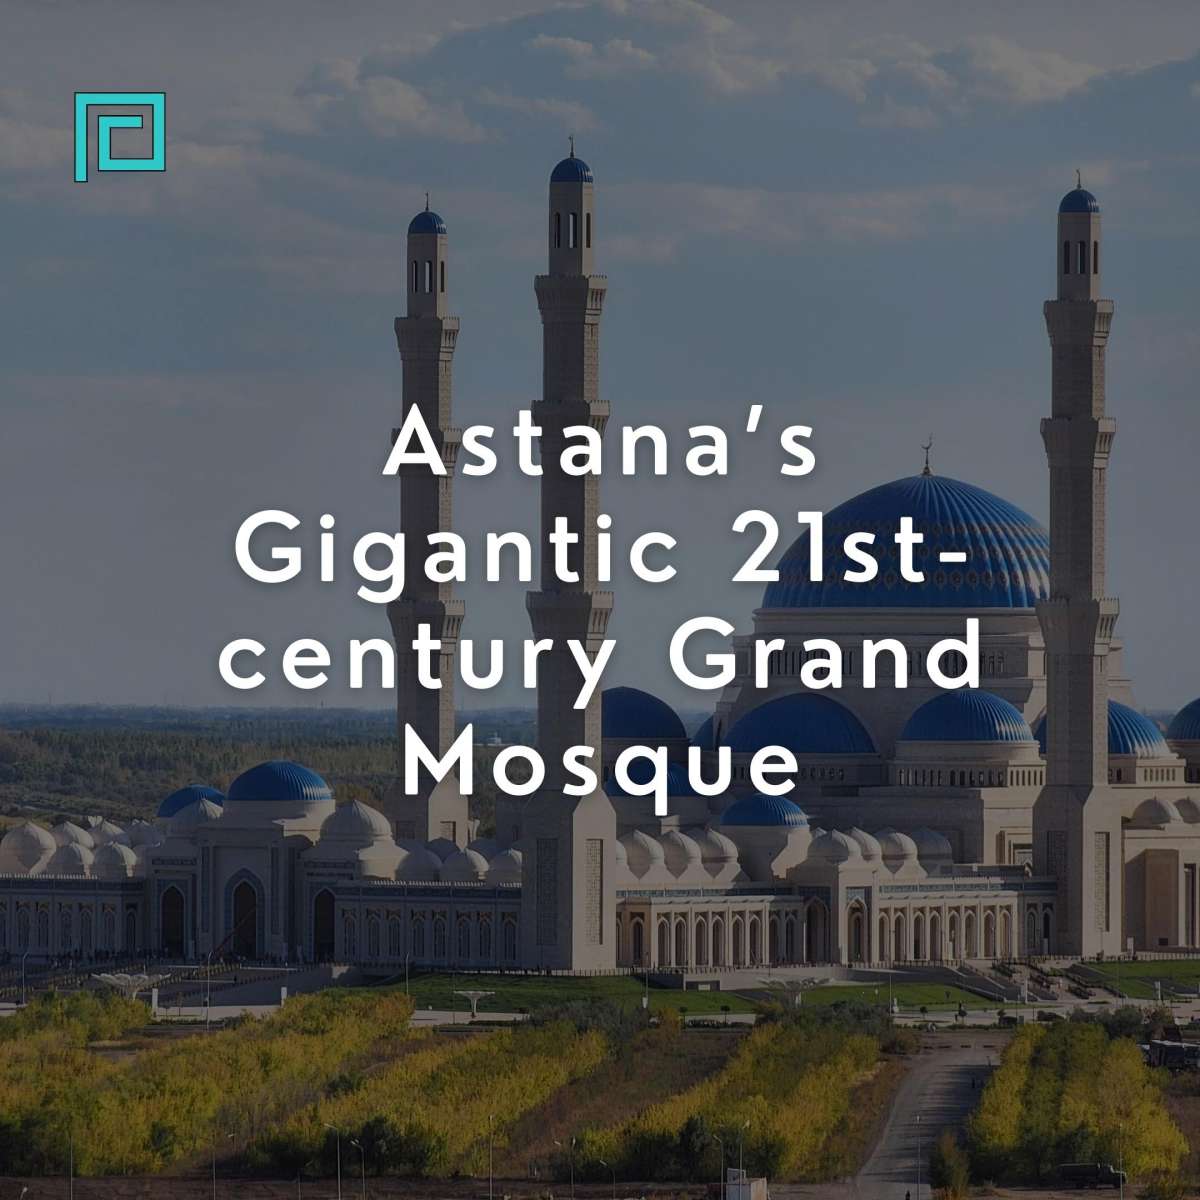 Astana’s Gigantic 21st-century Grand Mosque